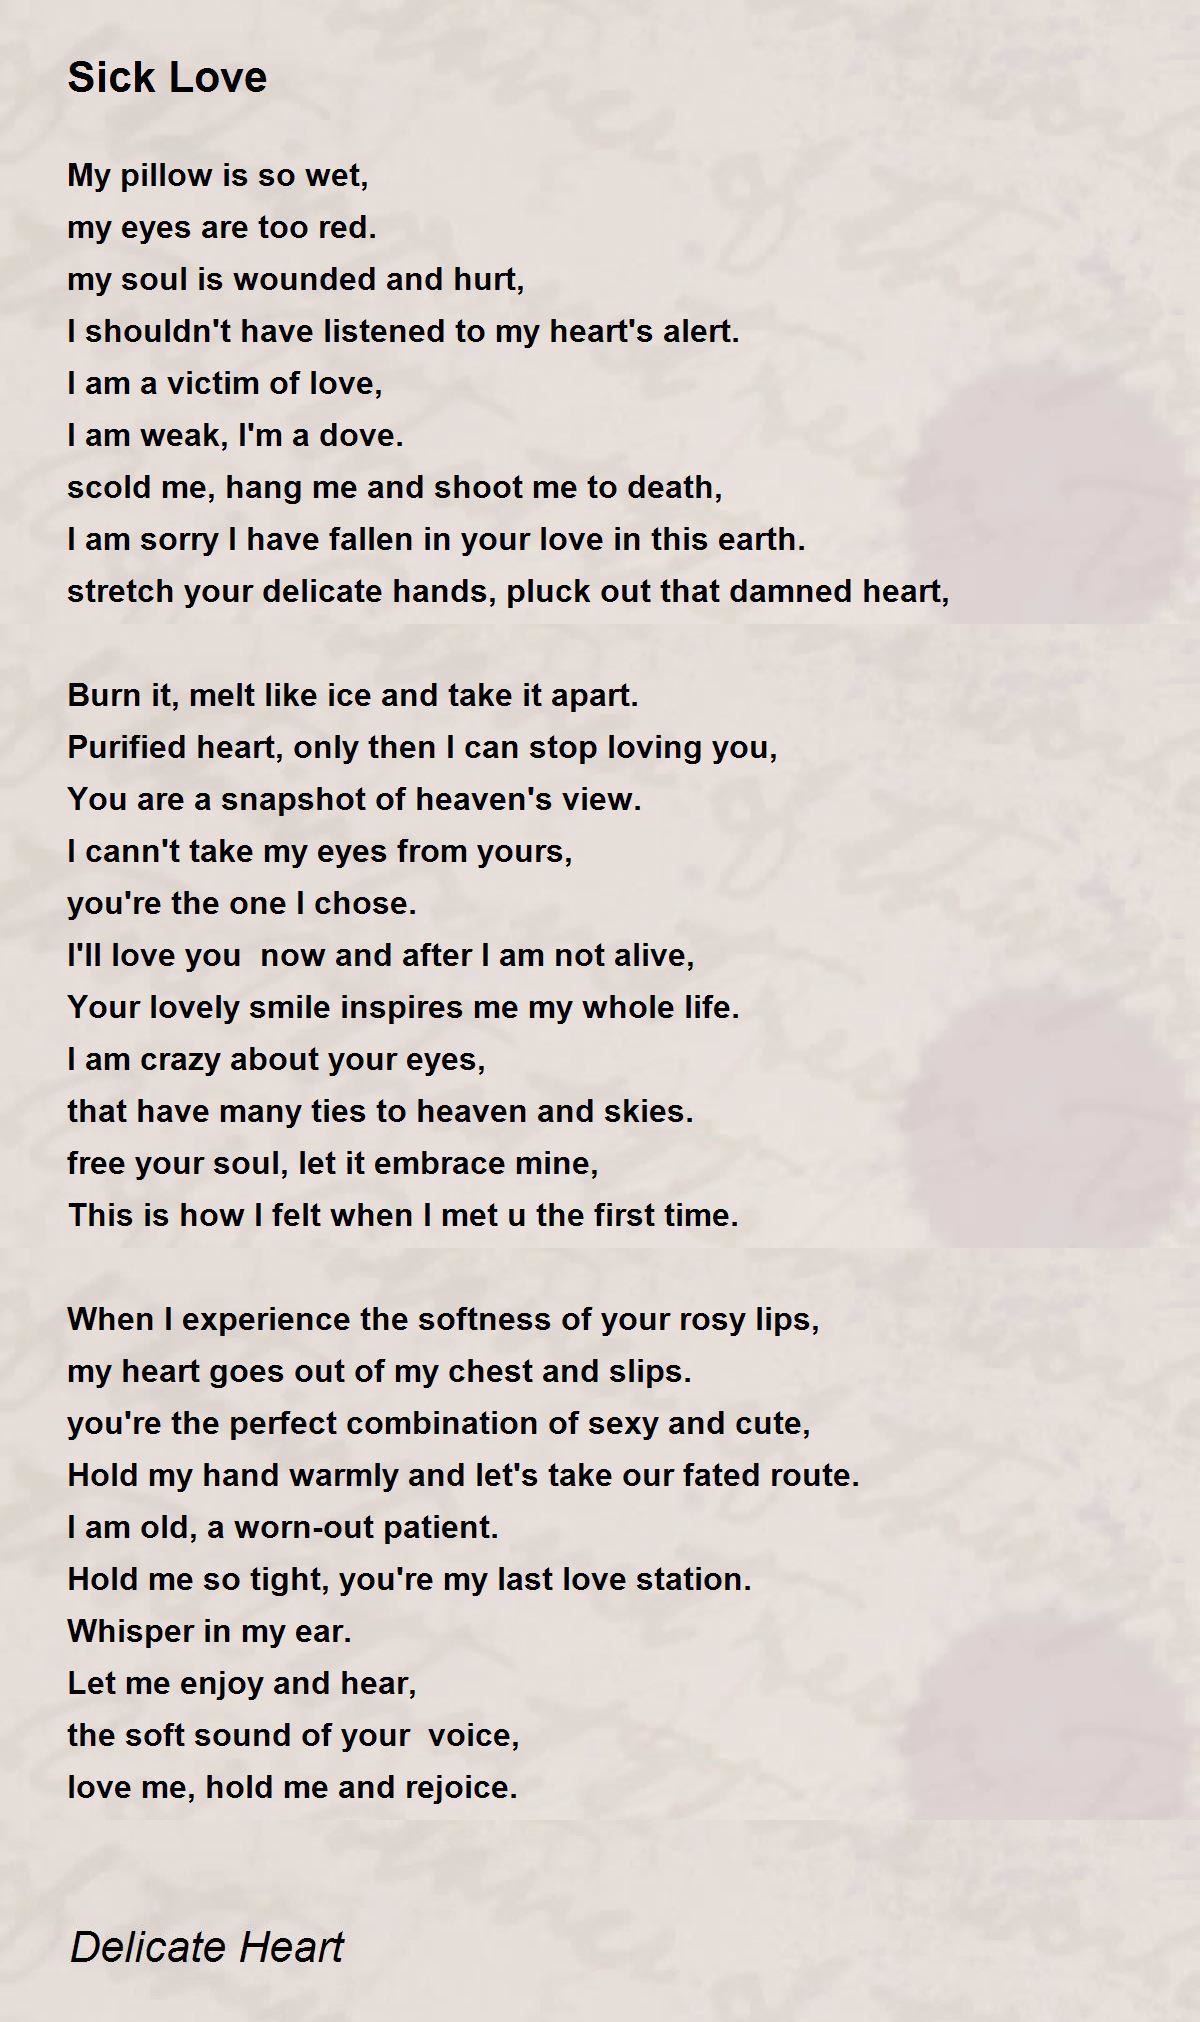 Sick Love - Sick Love Poem by Delicate Heart